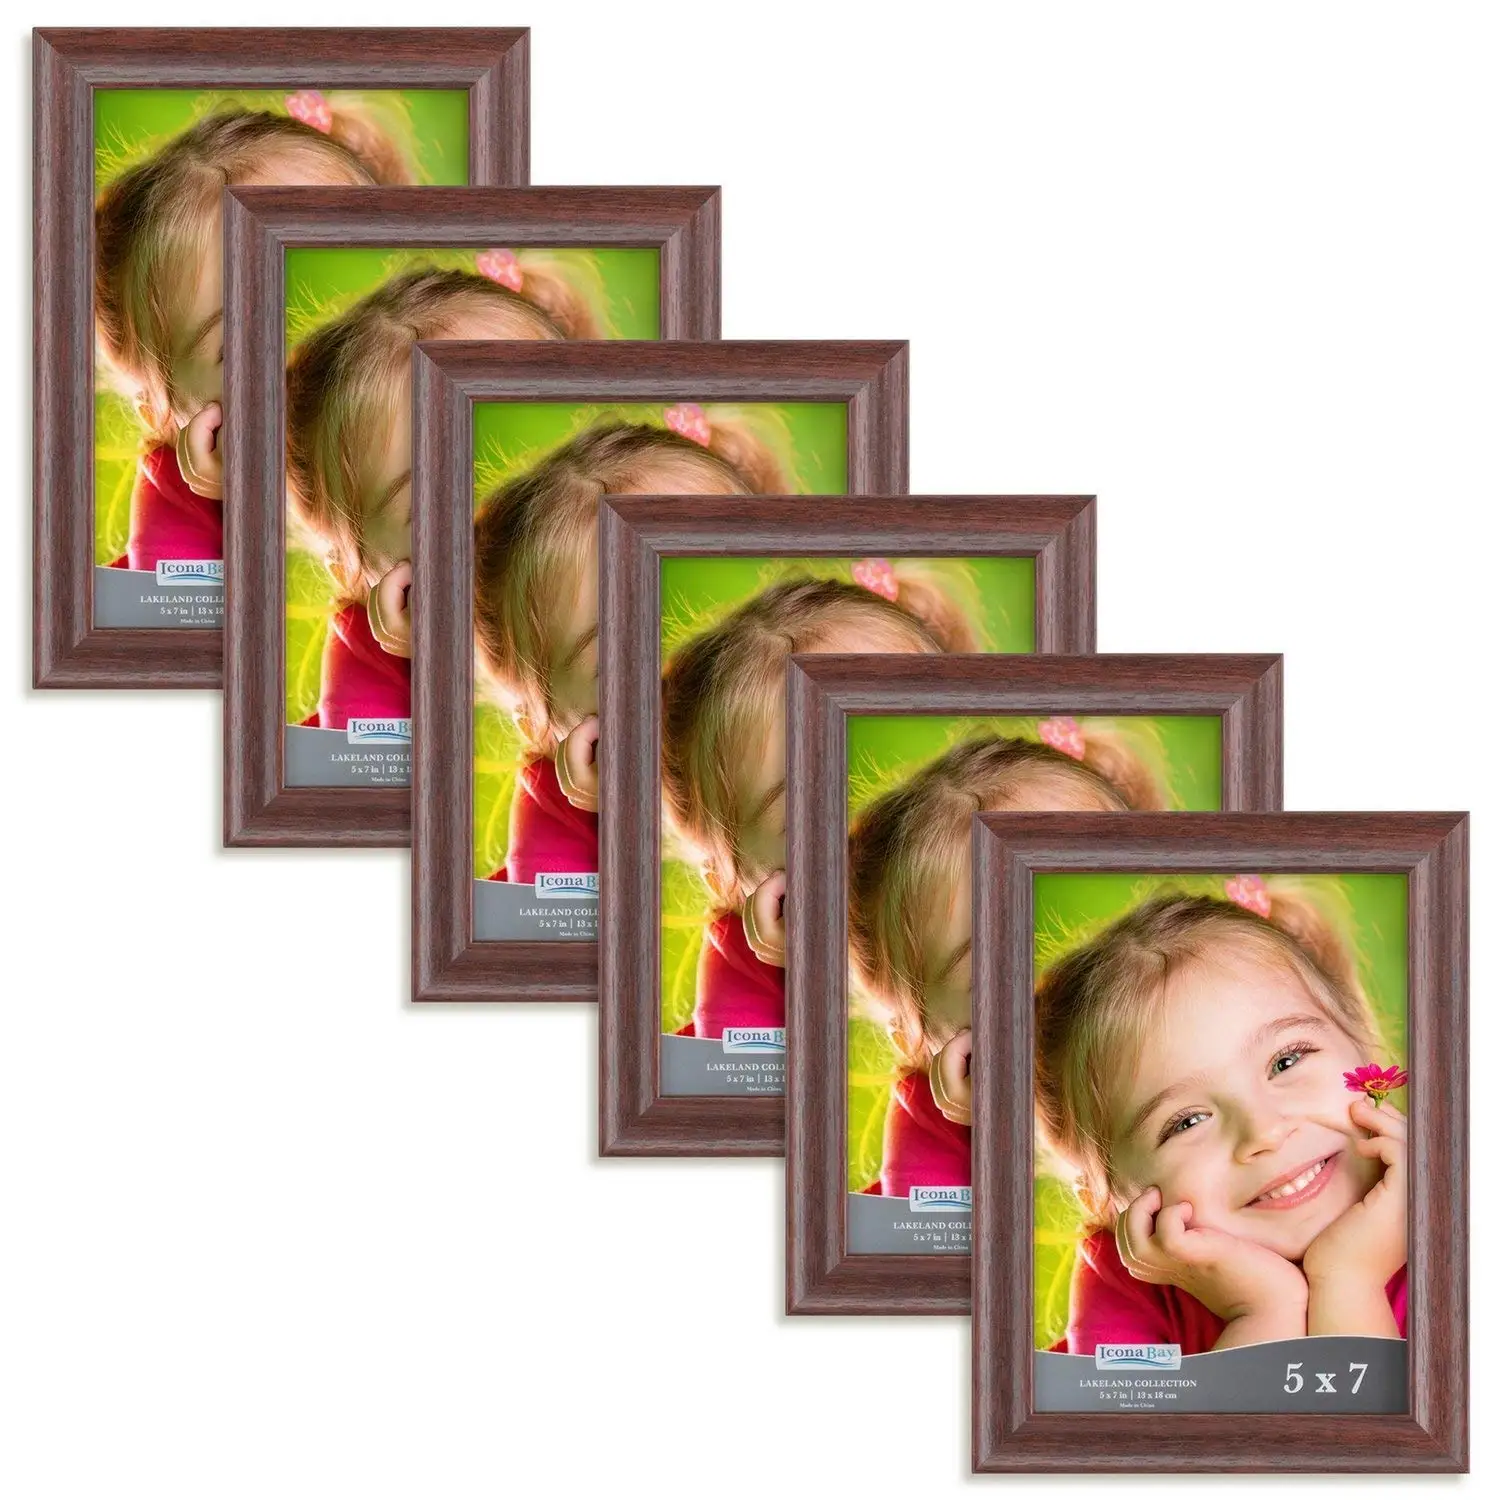 Buy Icona Bay 5x7 Picture Frames 5x7 (6 Pack, Teak Wood Finish), Frames